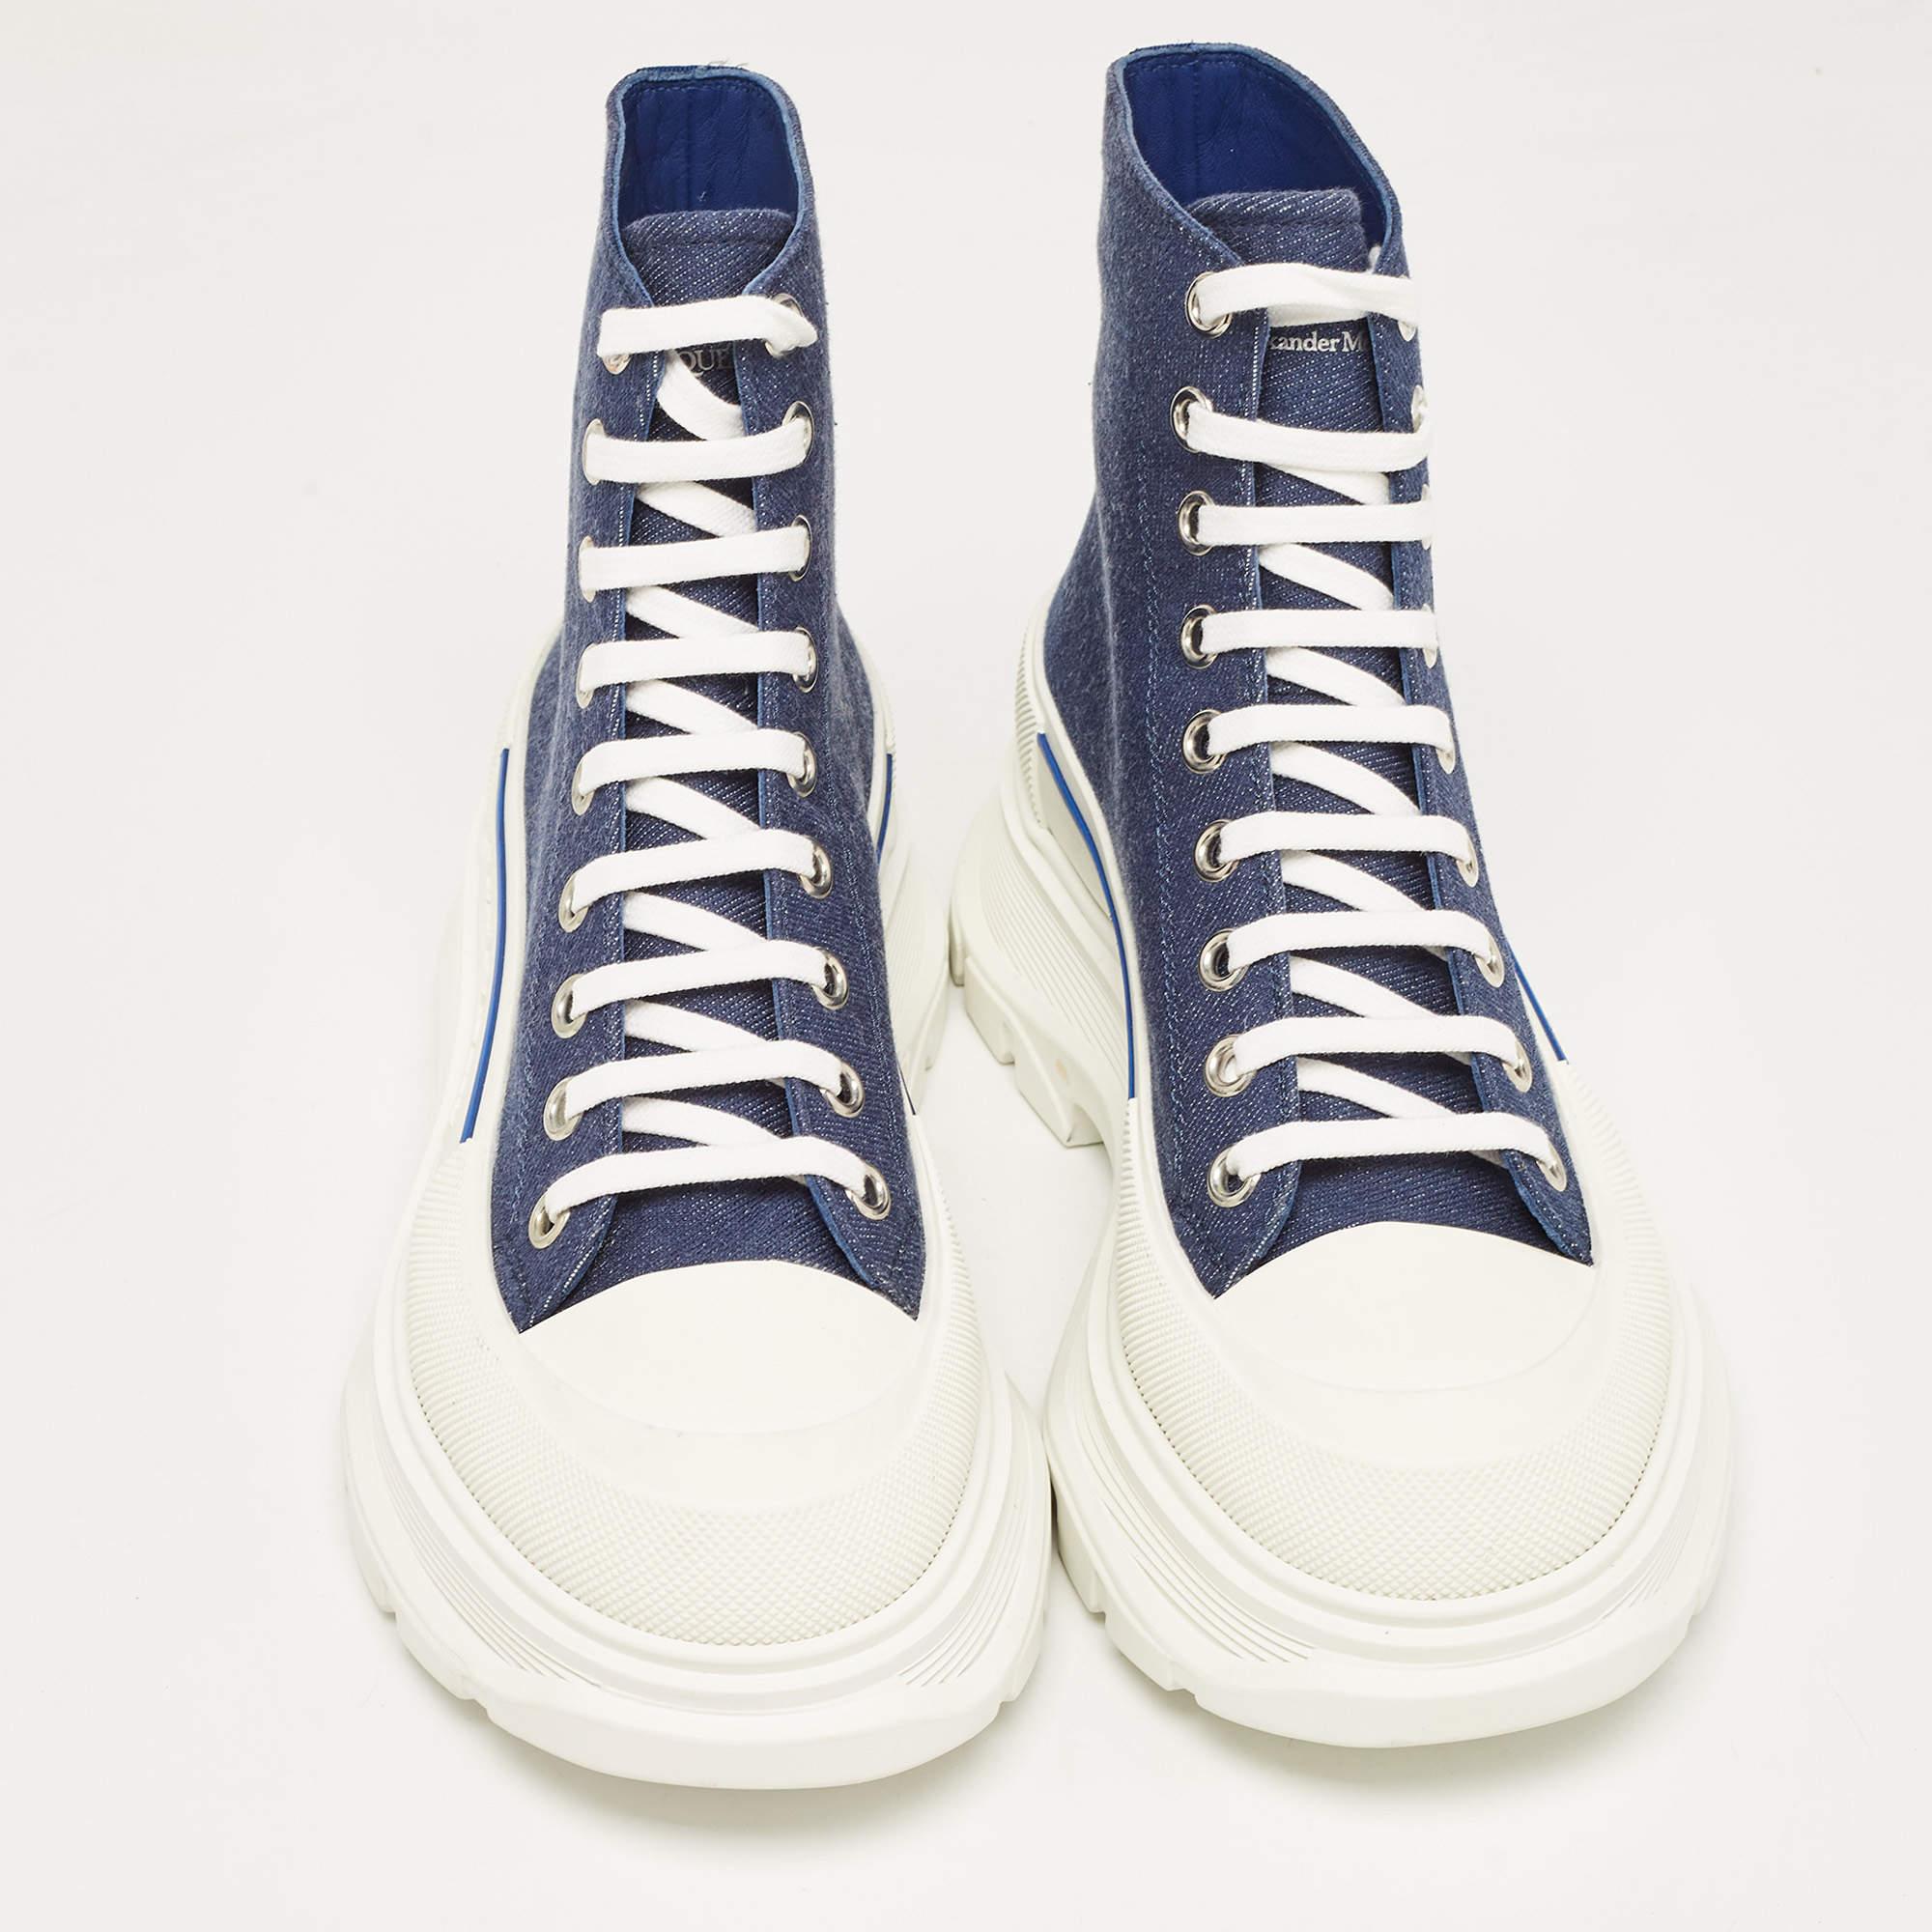 Alexander McQueen Blue Denim Tread Slick High Top Sneakers Size 40.5 In Excellent Condition For Sale In Dubai, Al Qouz 2